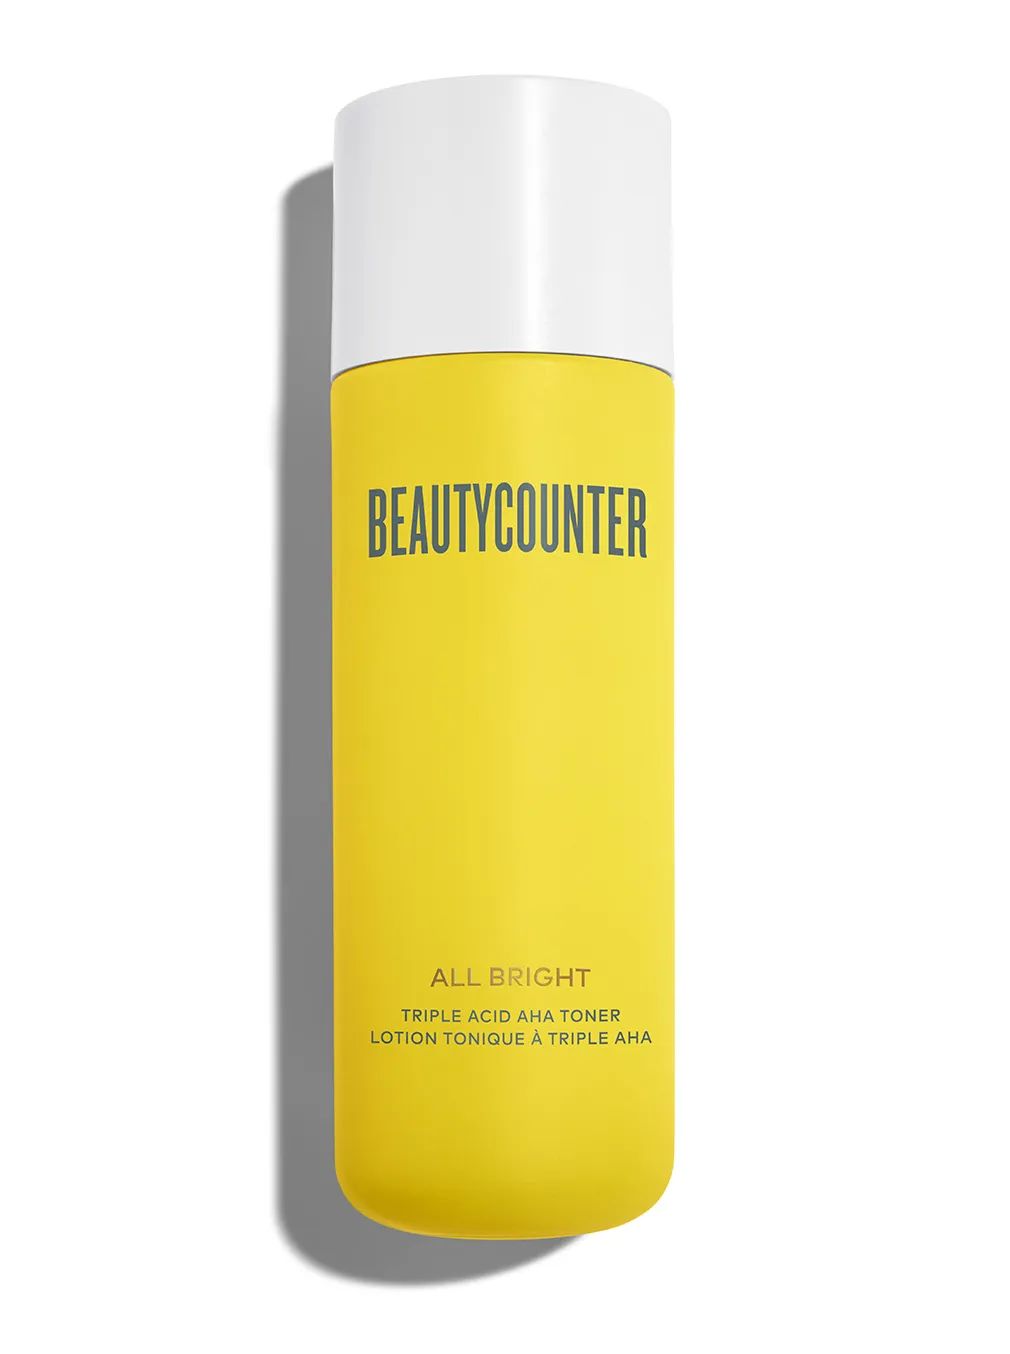 All Bright Triple Acid AHA Toner - Beautycounter - Skin Care, Makeup, Bath and Body and more! | Beautycounter.com